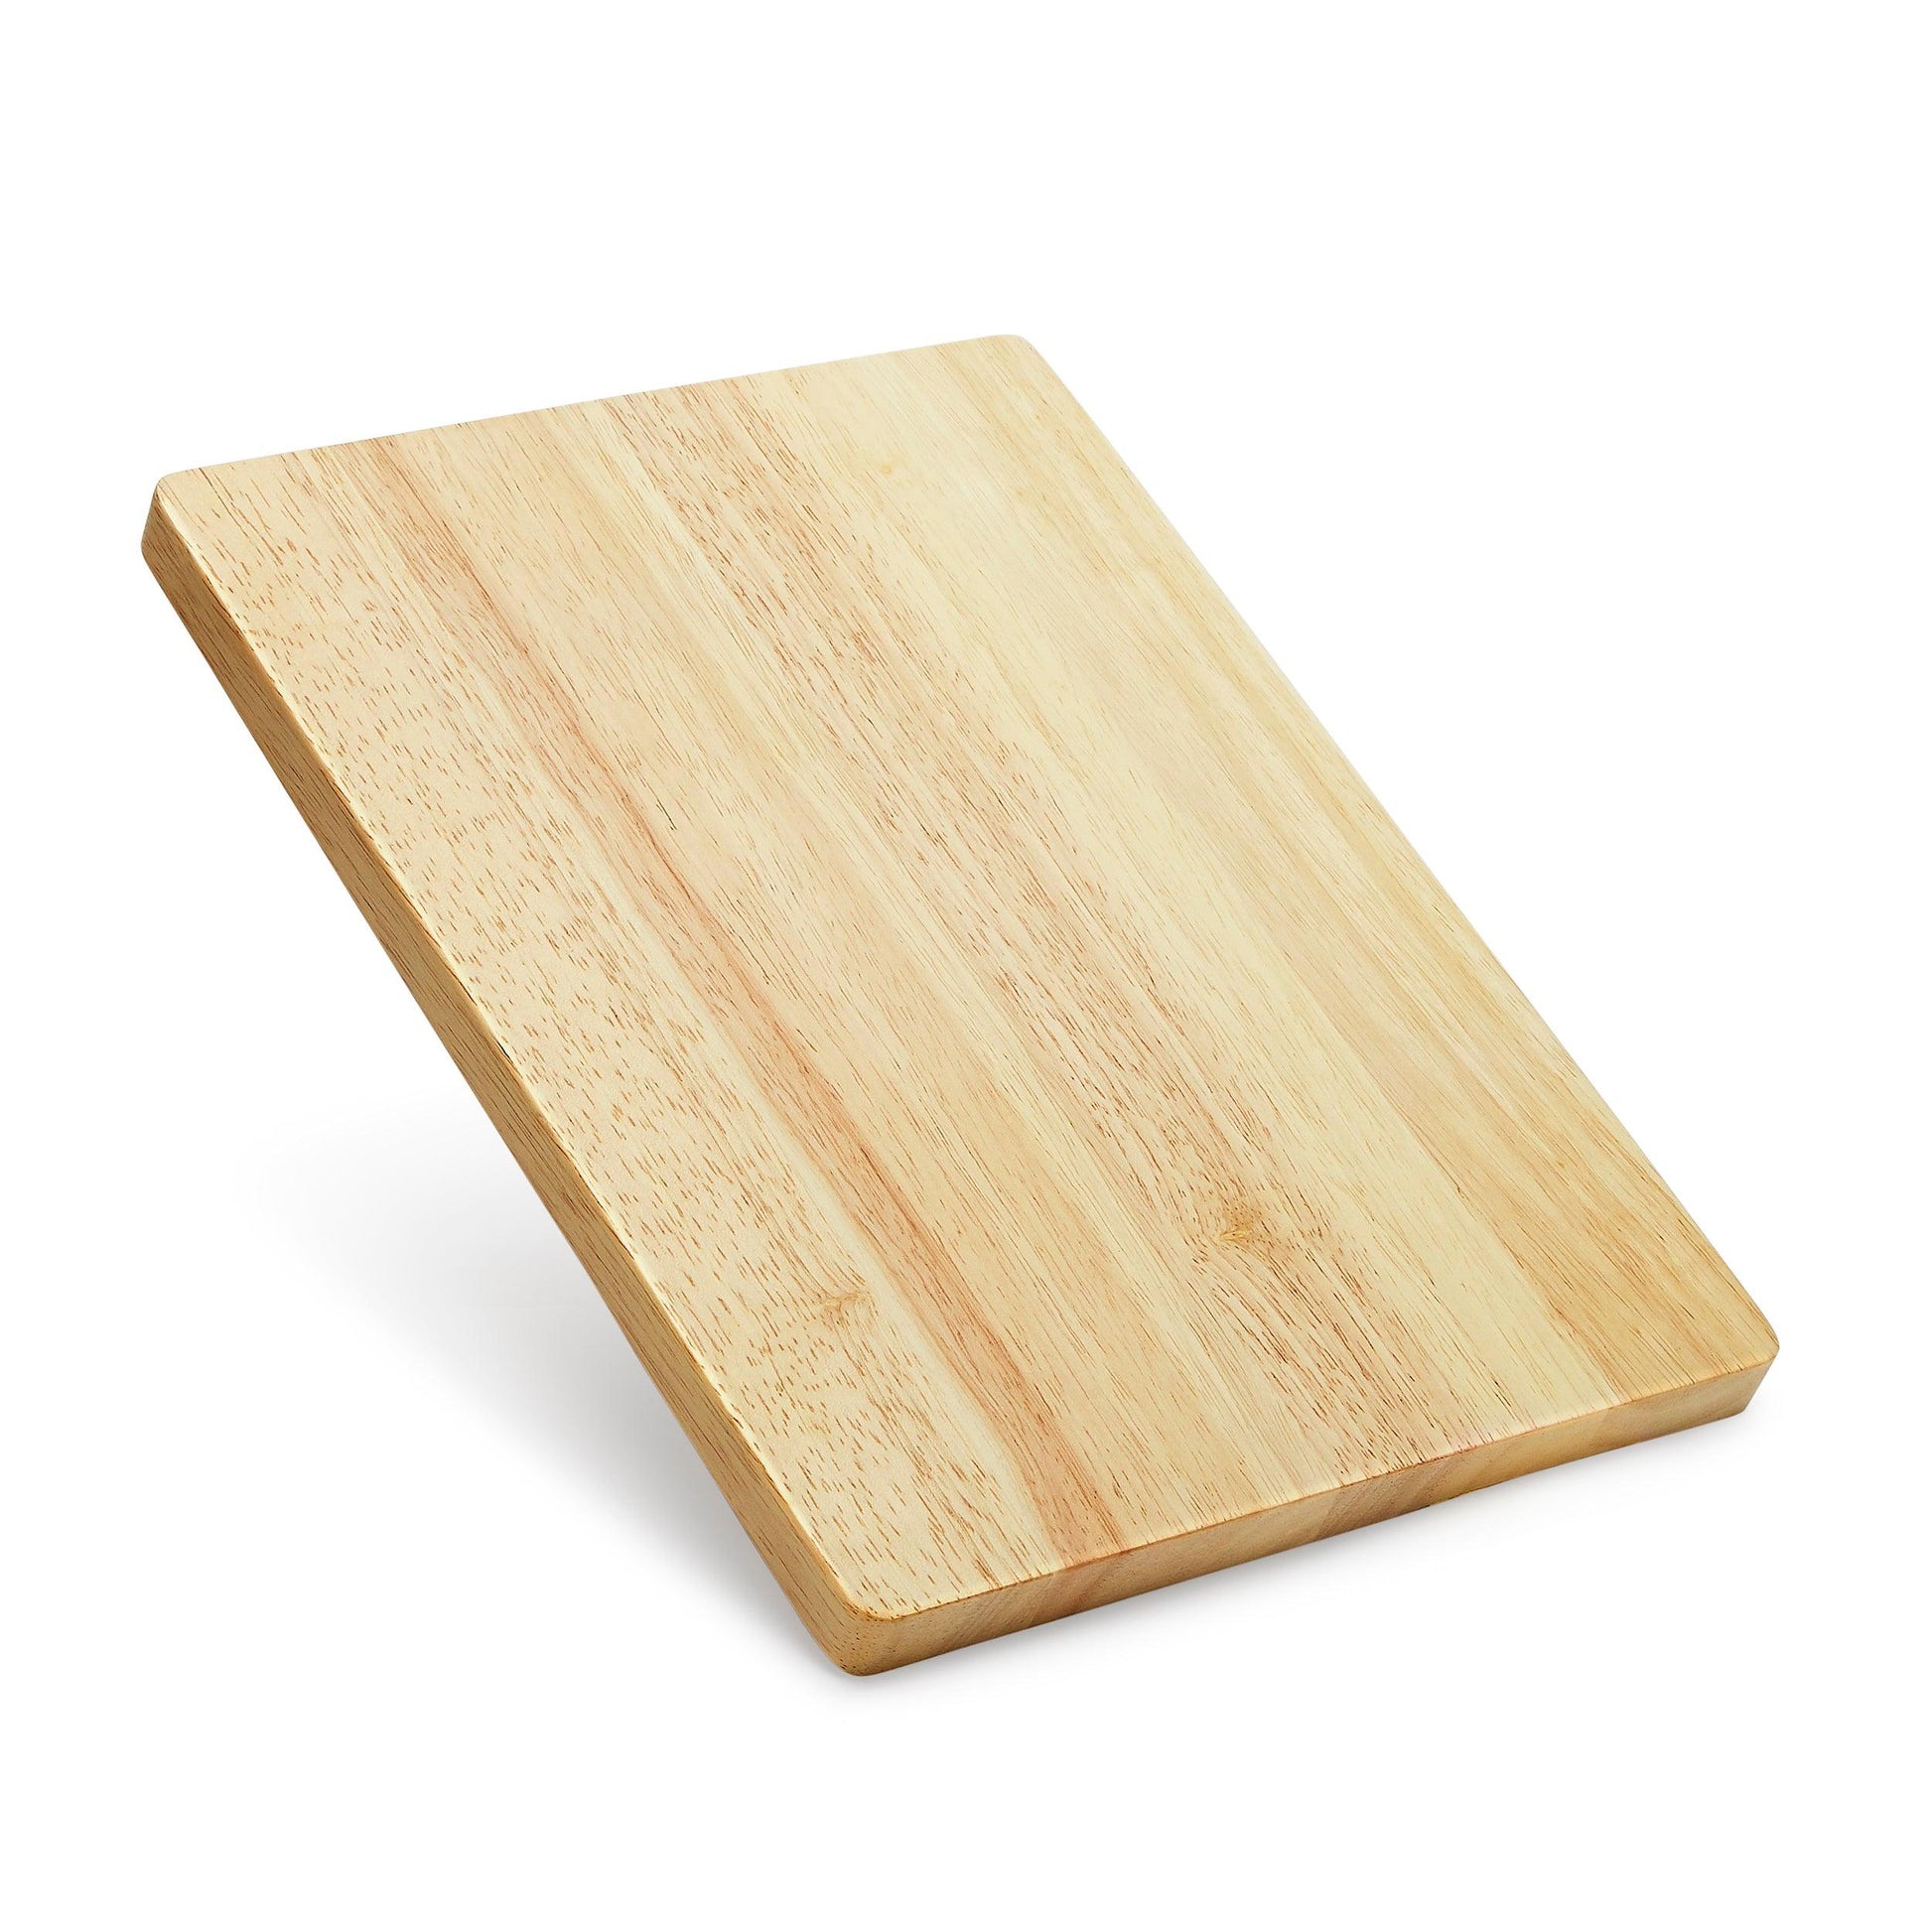 MakerFlo Crafts Cutting Board, Rubber Wood